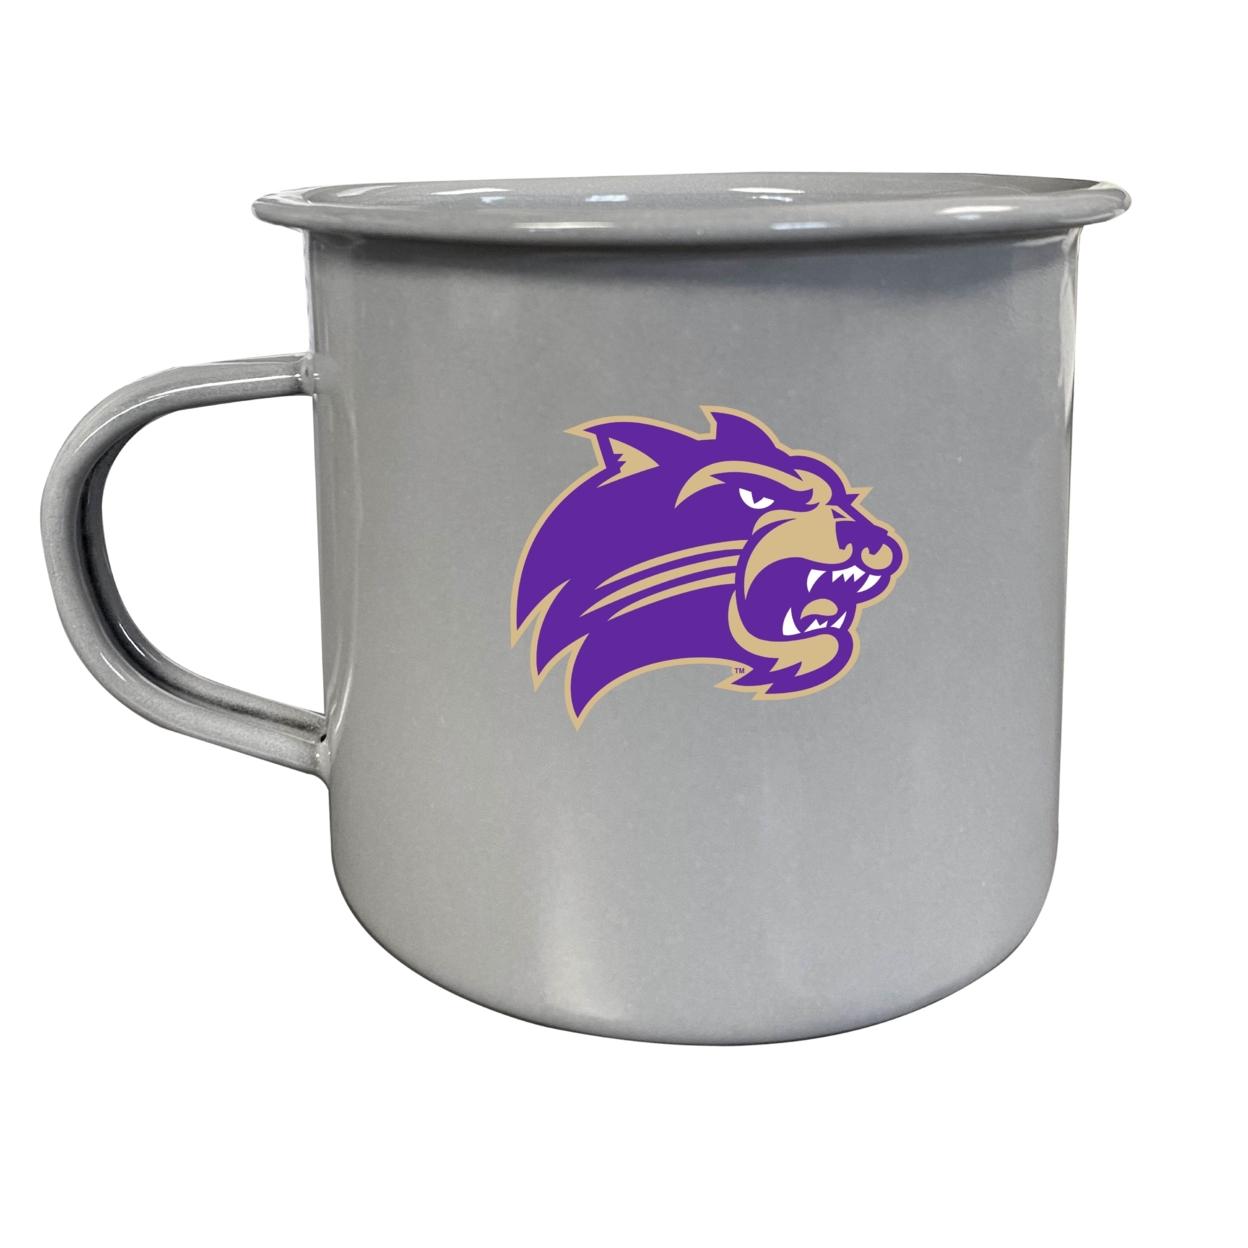 Western Carolina University Tin Camper Coffee Mug - Choose Your Color - Gray